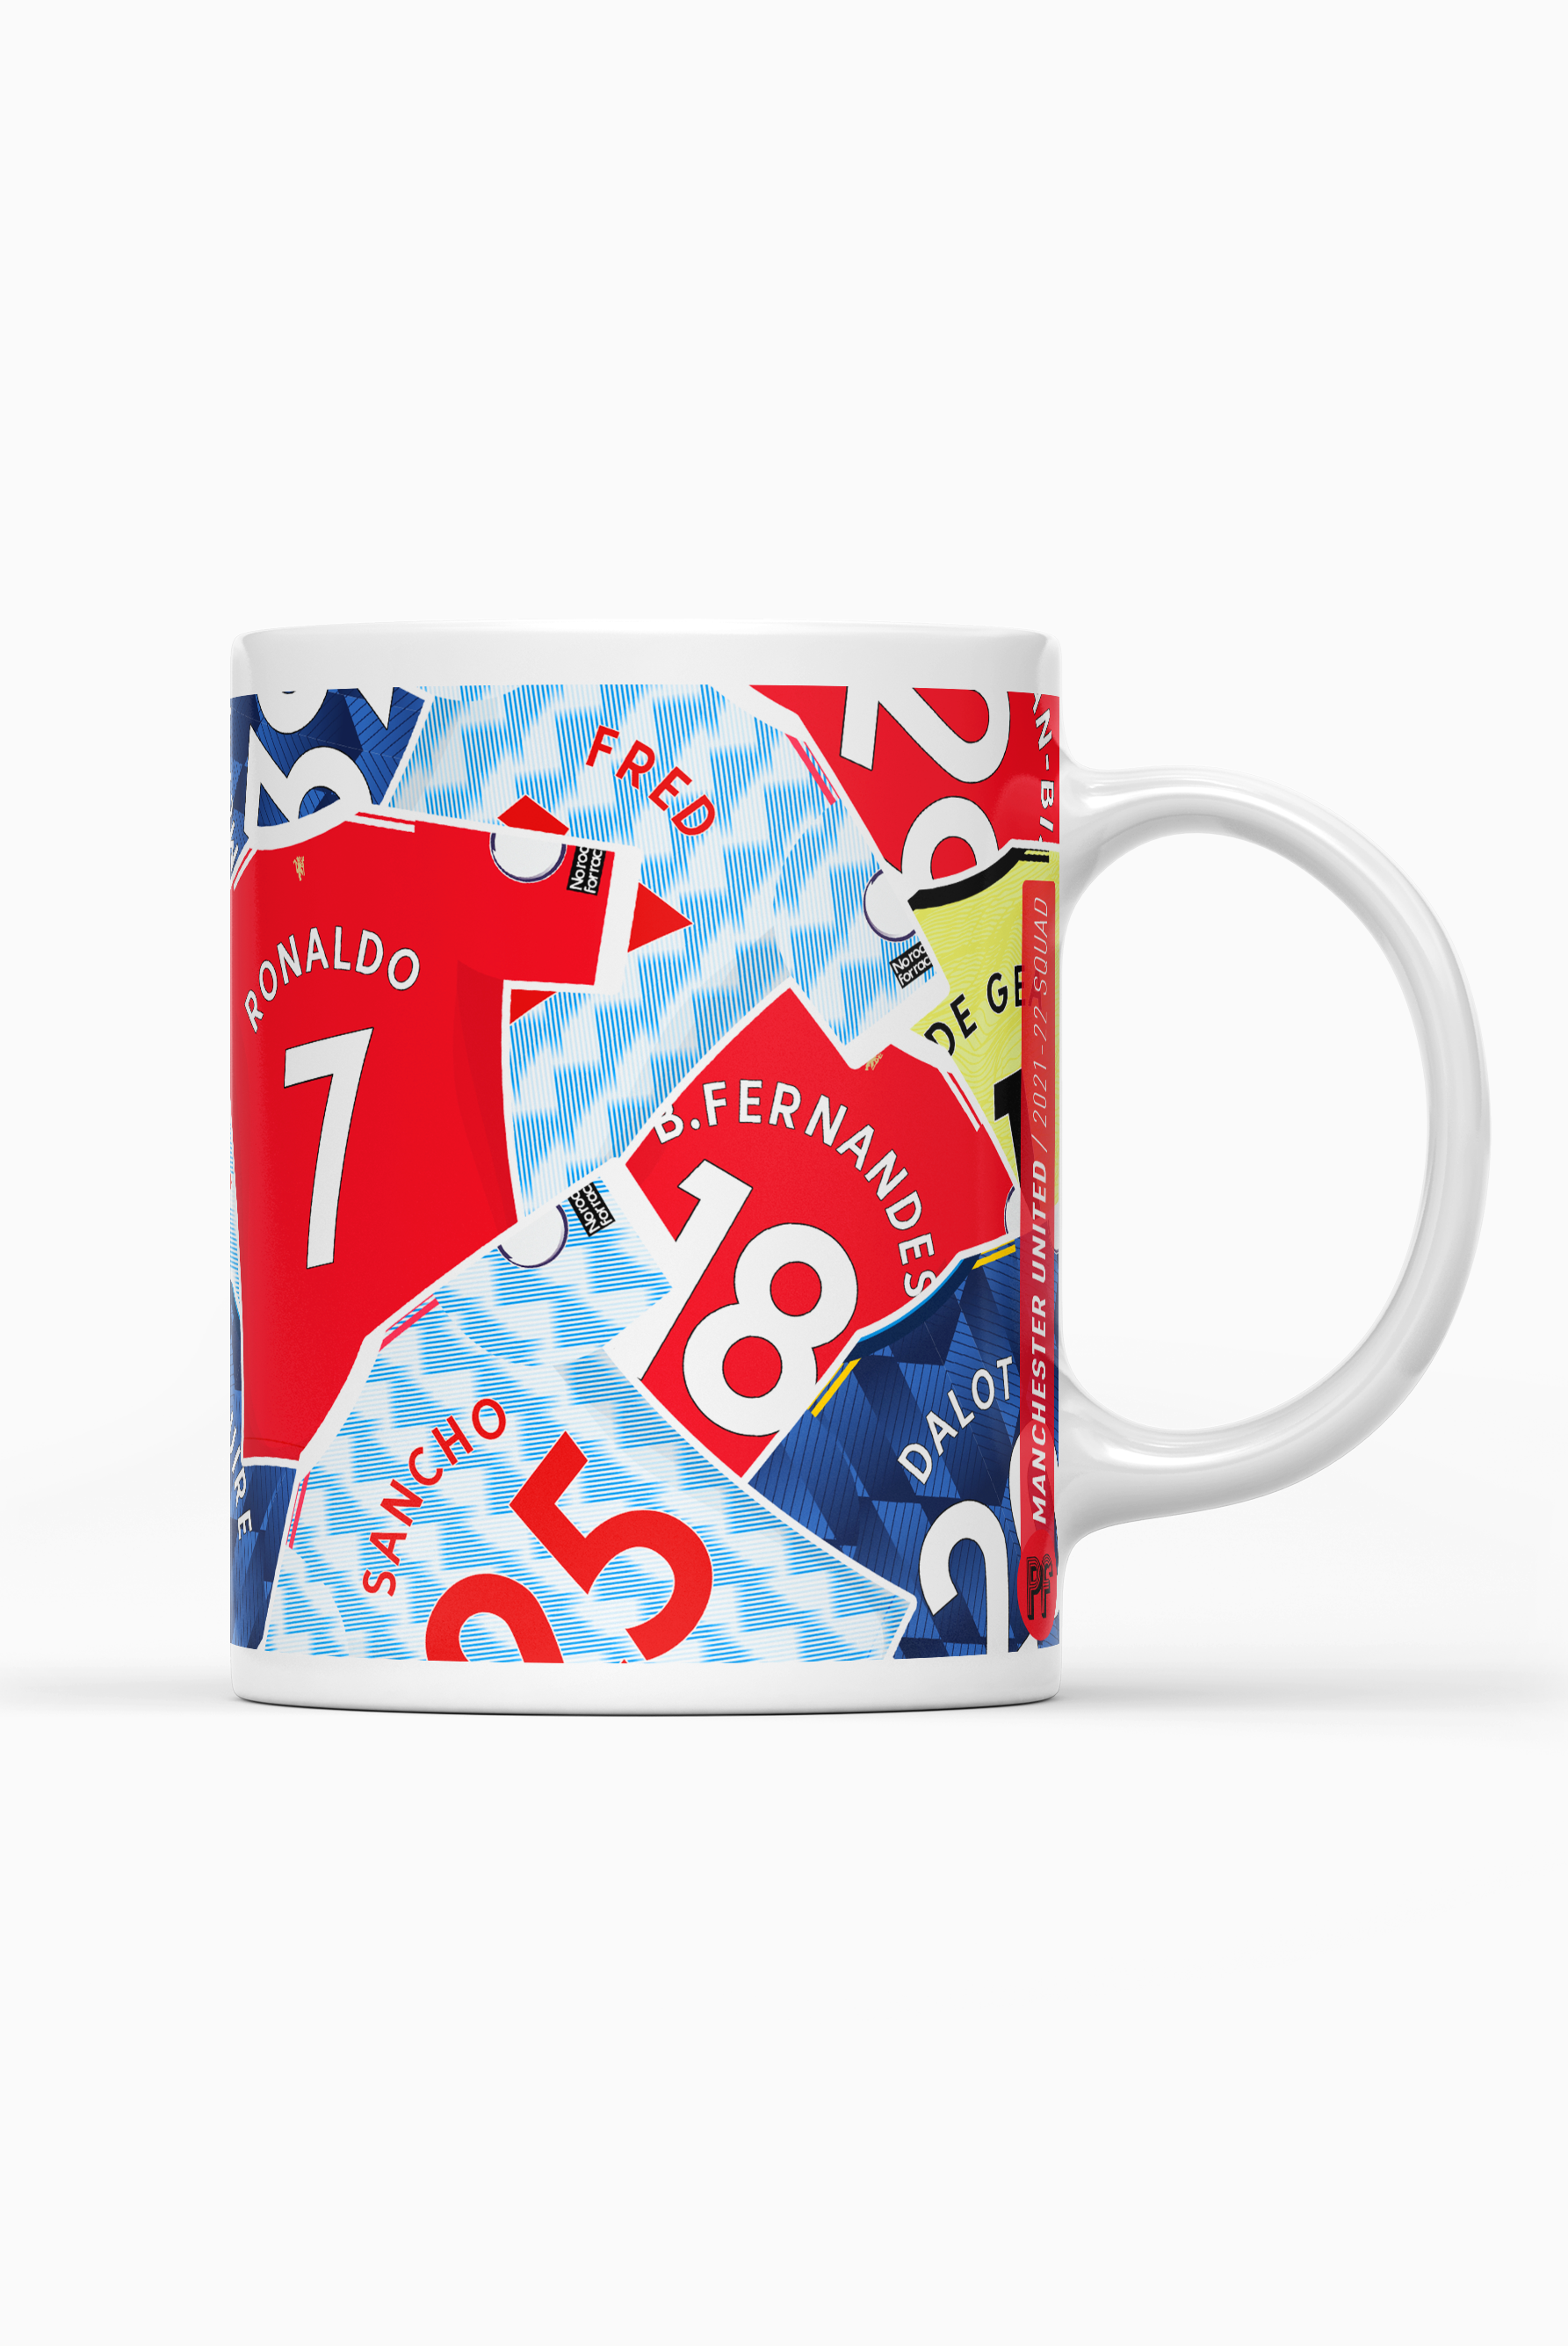 Man United / 2021-22 Squad Mug